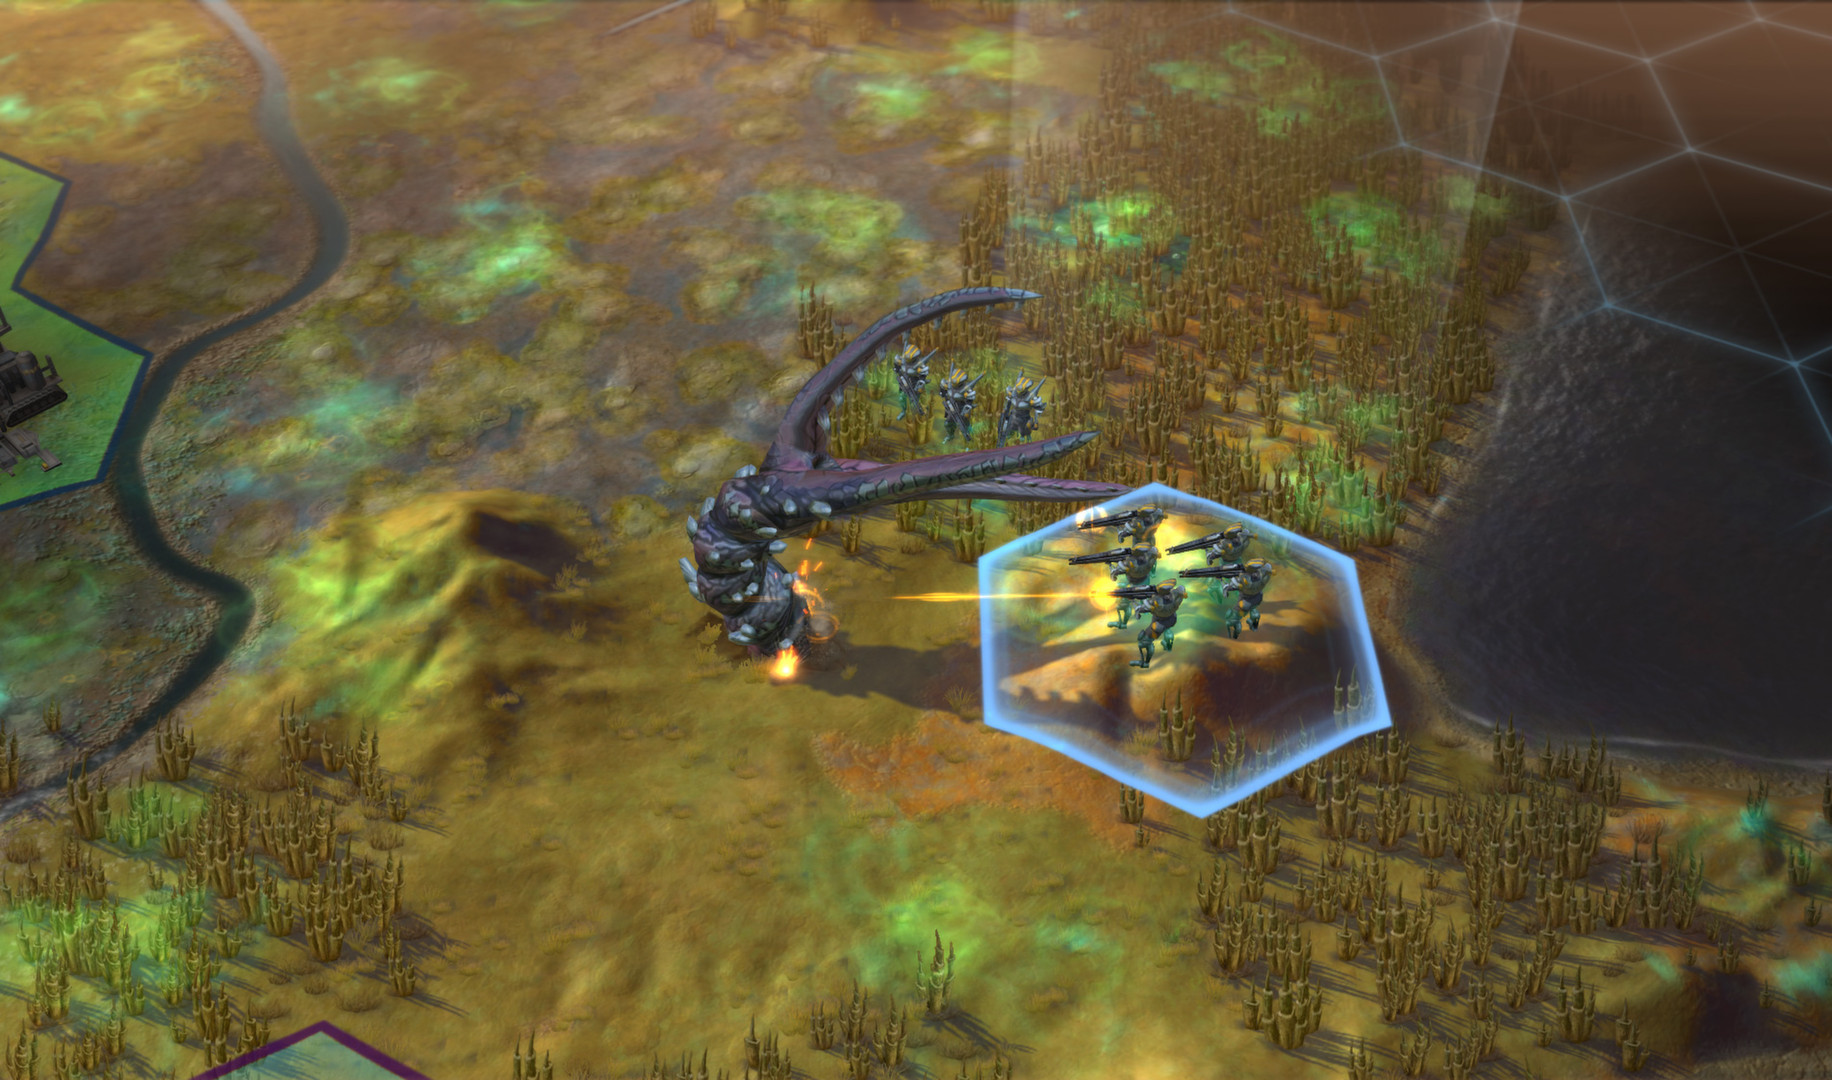 Sid Meiers Civilization Beyond Earth Rising Tide, games, pc-games,  xbox-games, HD wallpaper